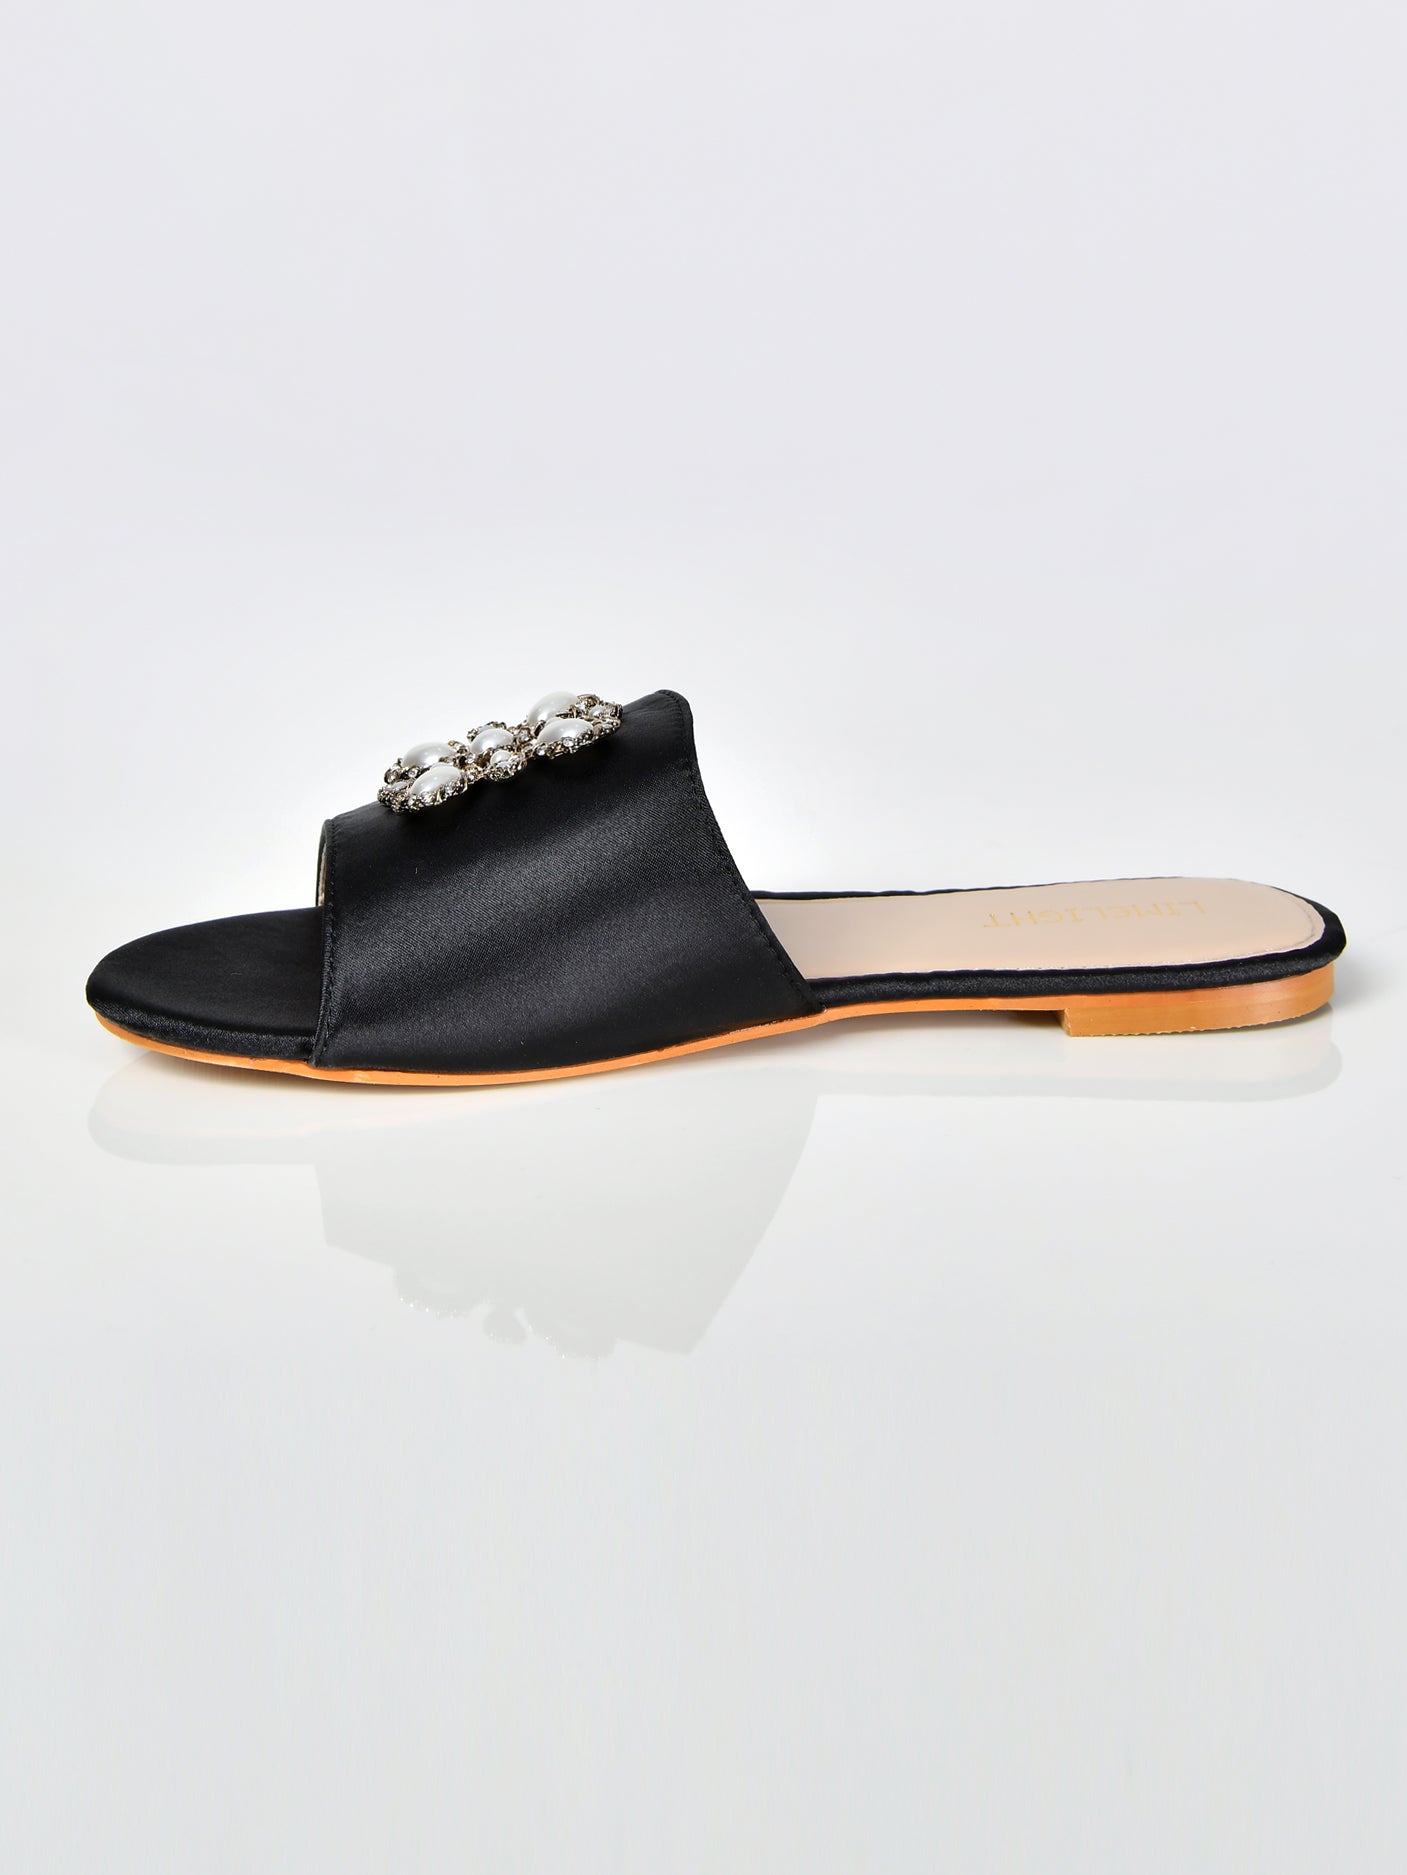 Pearl Satin Sandals-Black